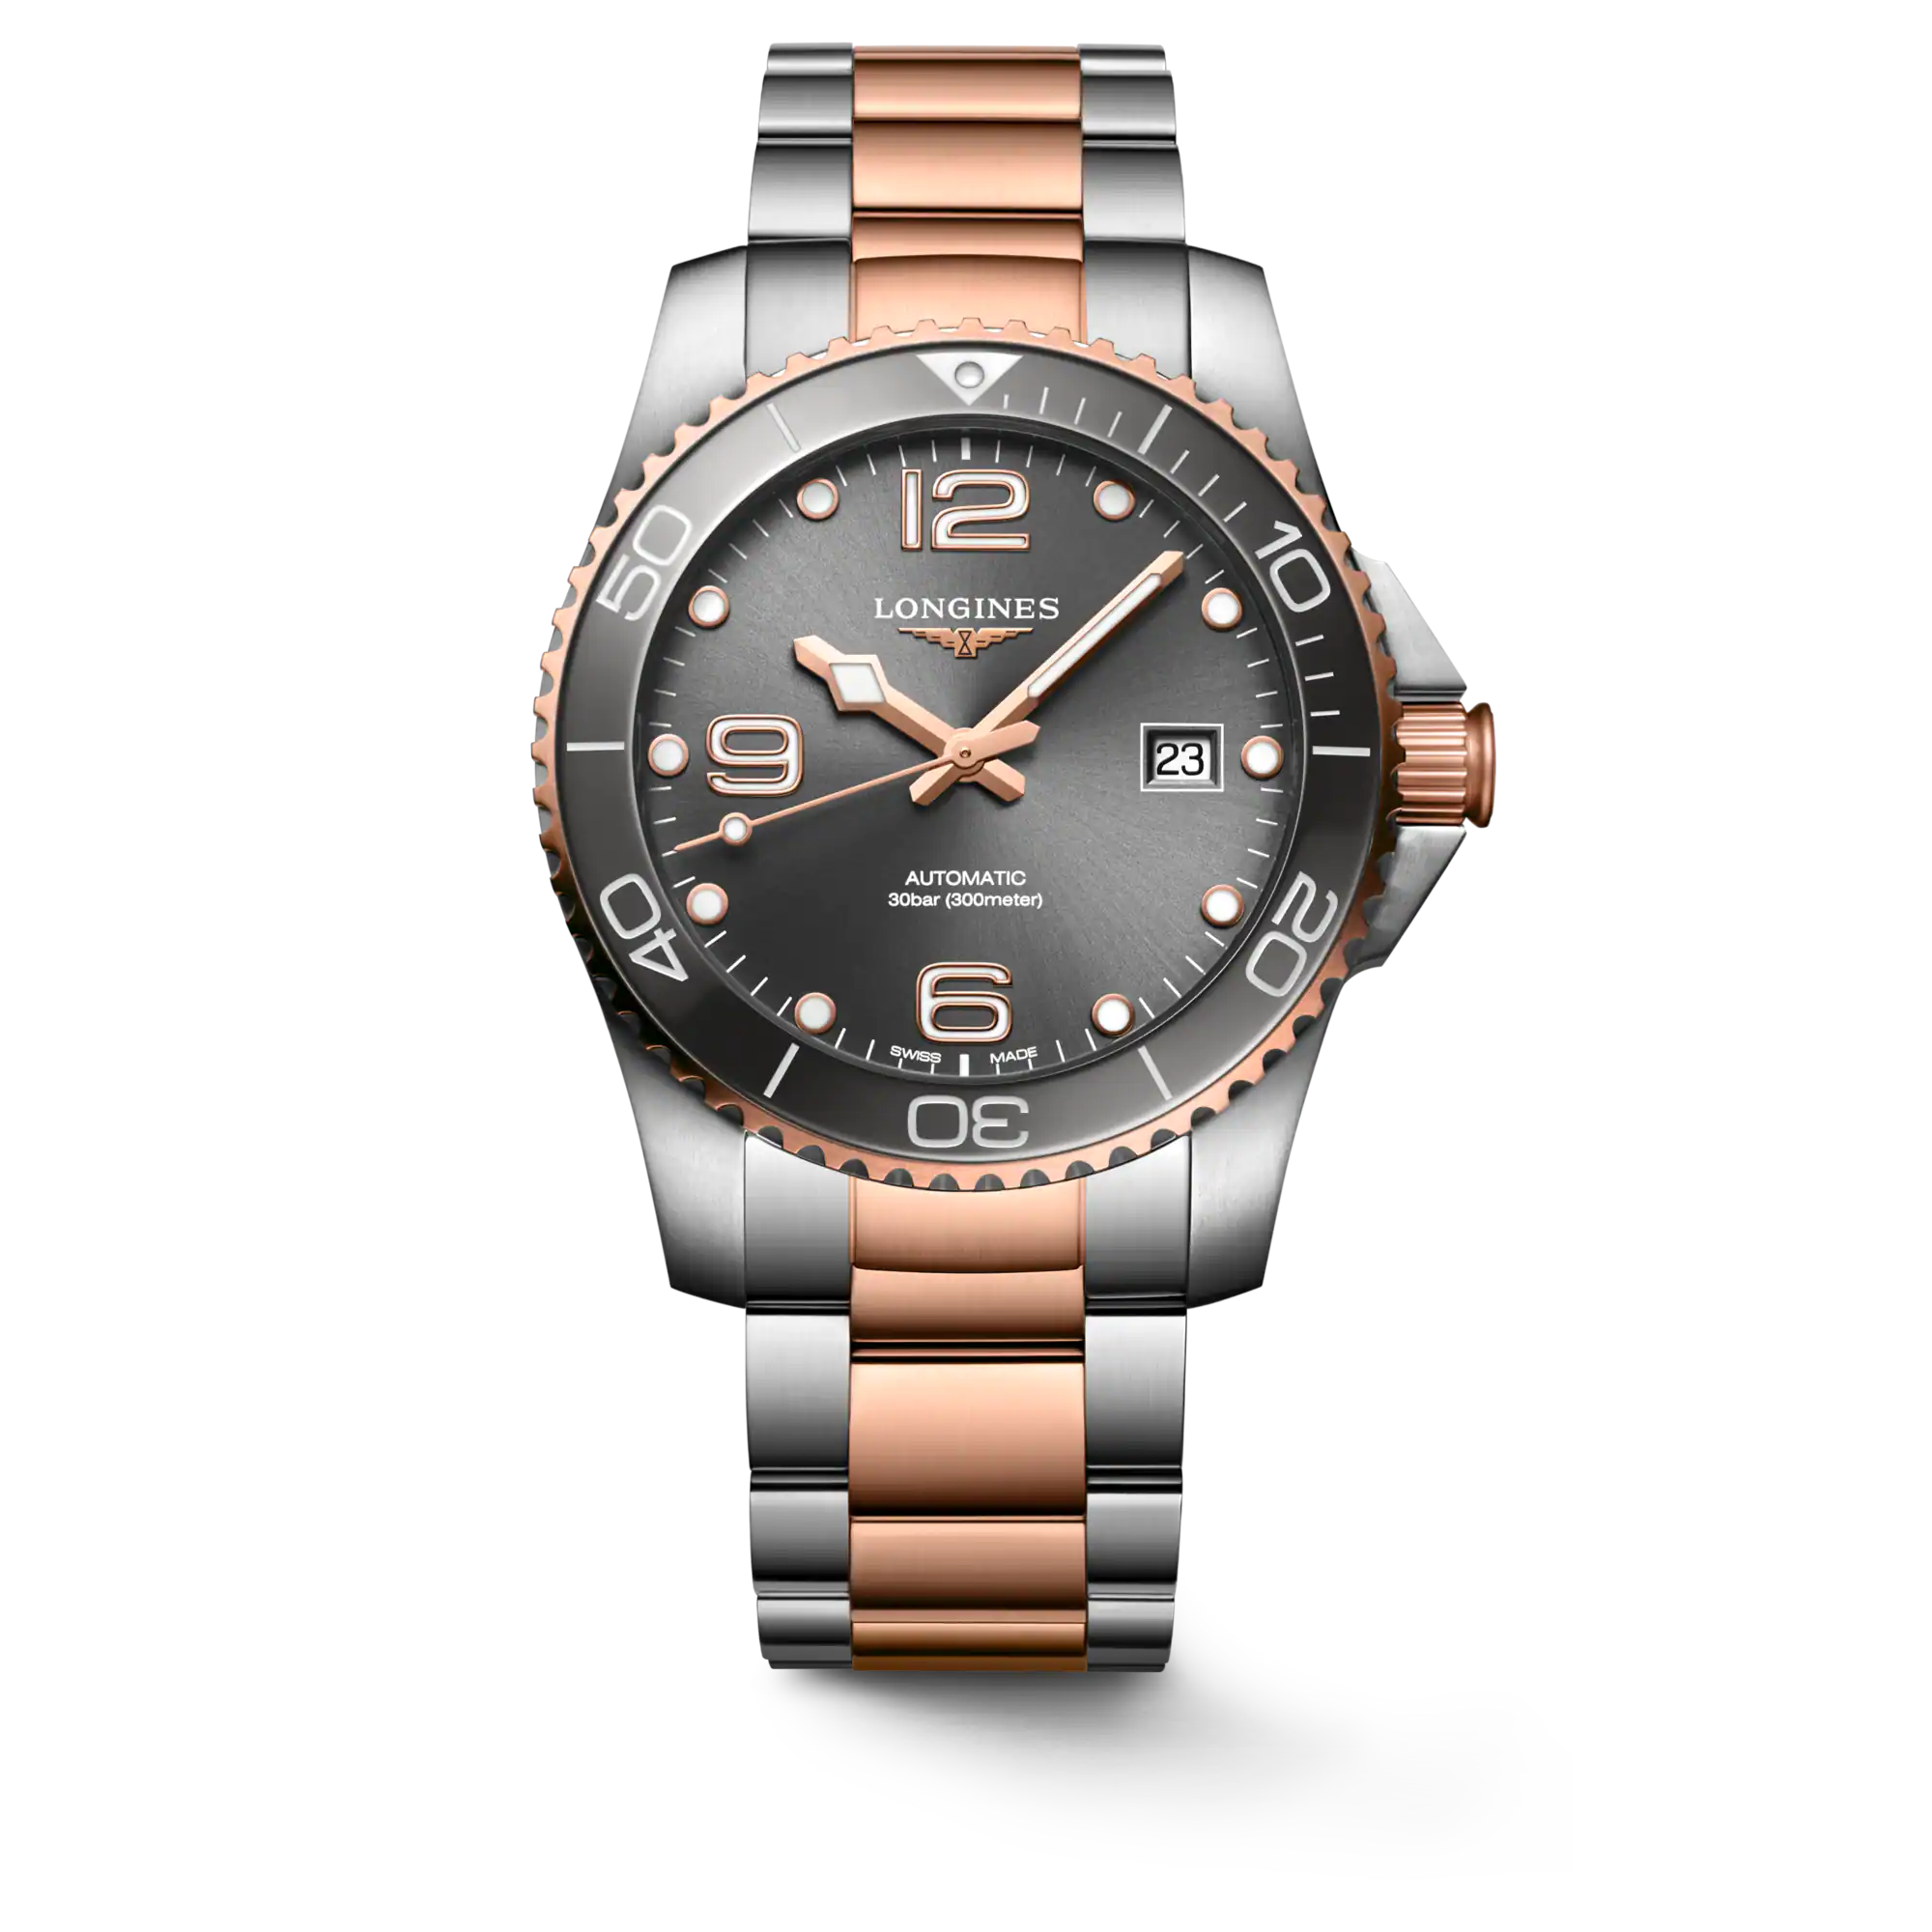 Longines Hydroconquest Automatic Men's Watch L37813787